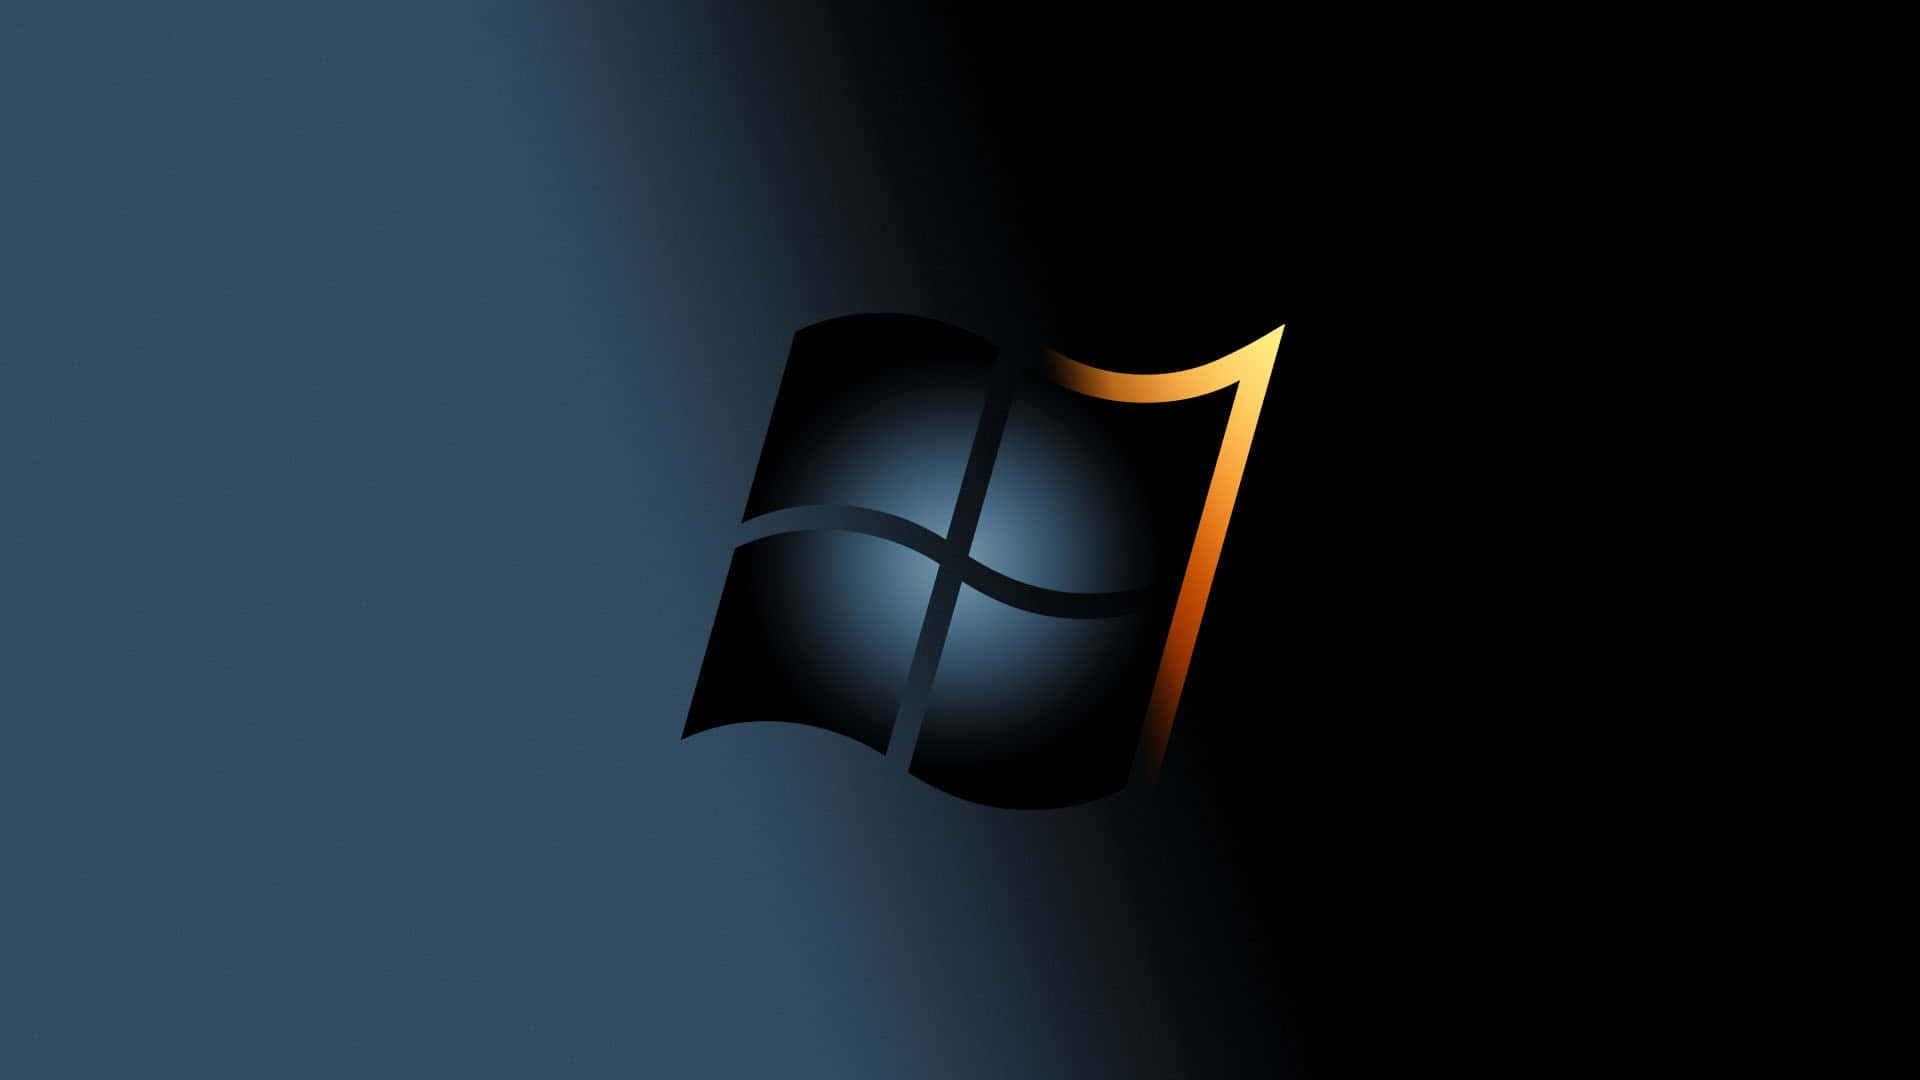 Windows Logo On A Black Background